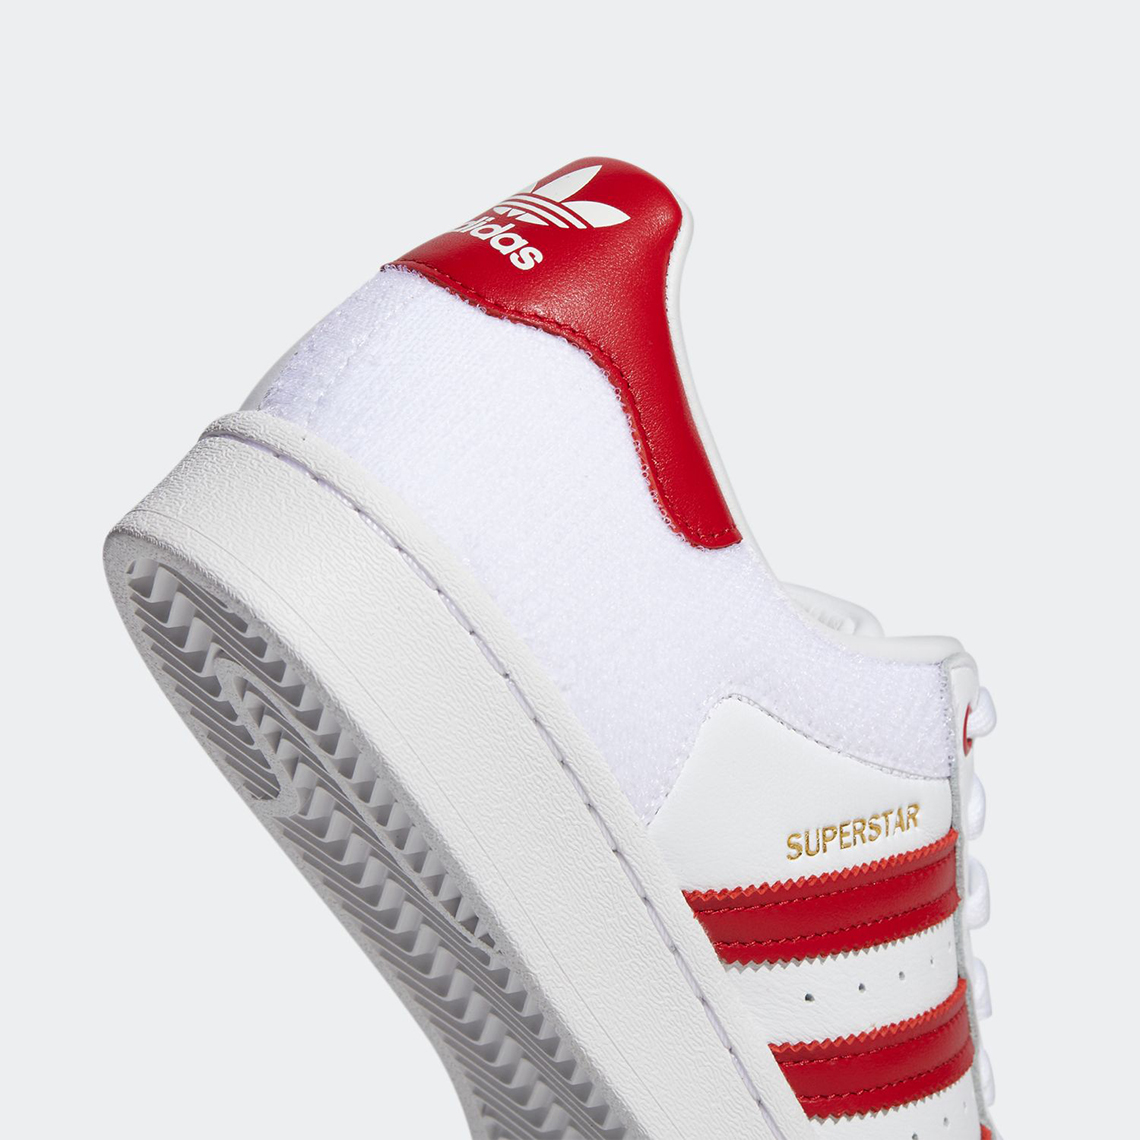 adidas Superstar White Red FY3117 